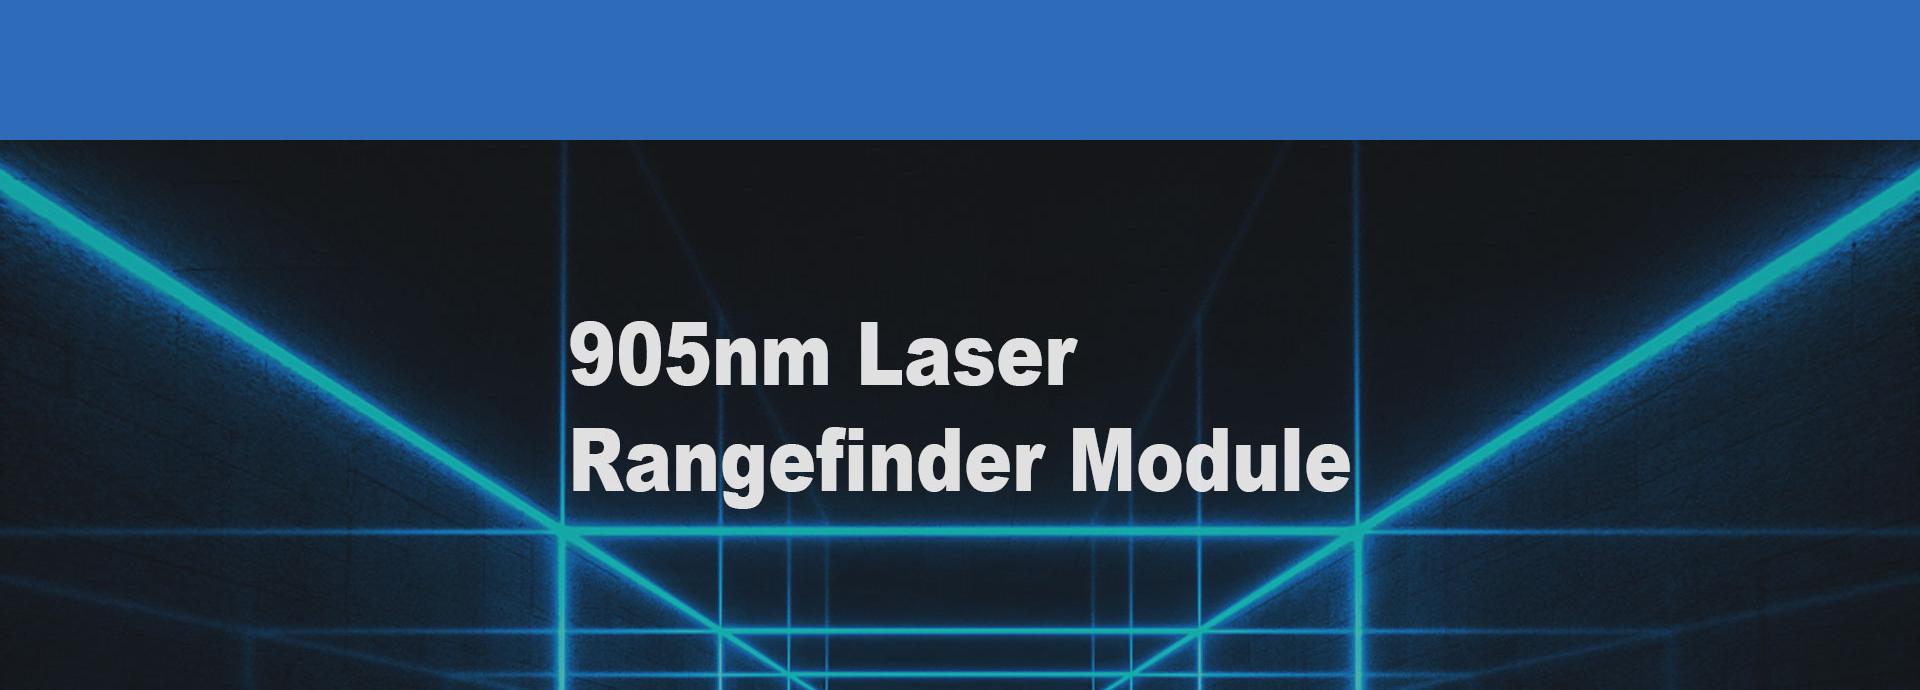 2km Laser Range Finder Module